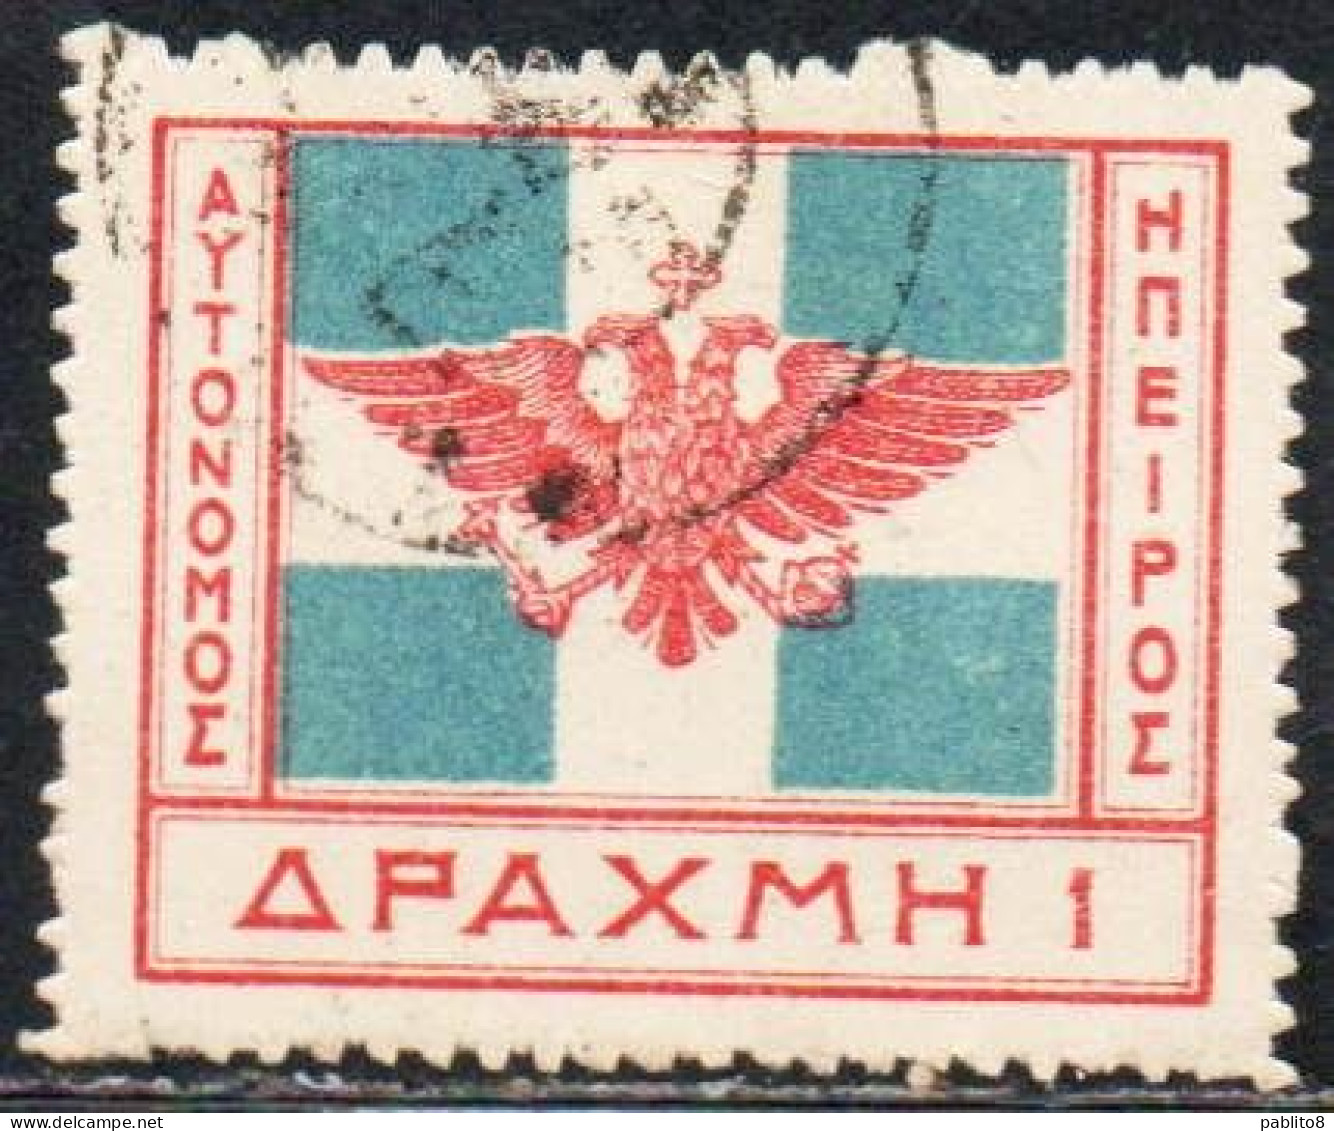 GREECE GRECIA HELLAS EPIRUS EPIRO 1914 ARMS FLAG 1d USED USATO OBLITERE' - Epiro Del Norte